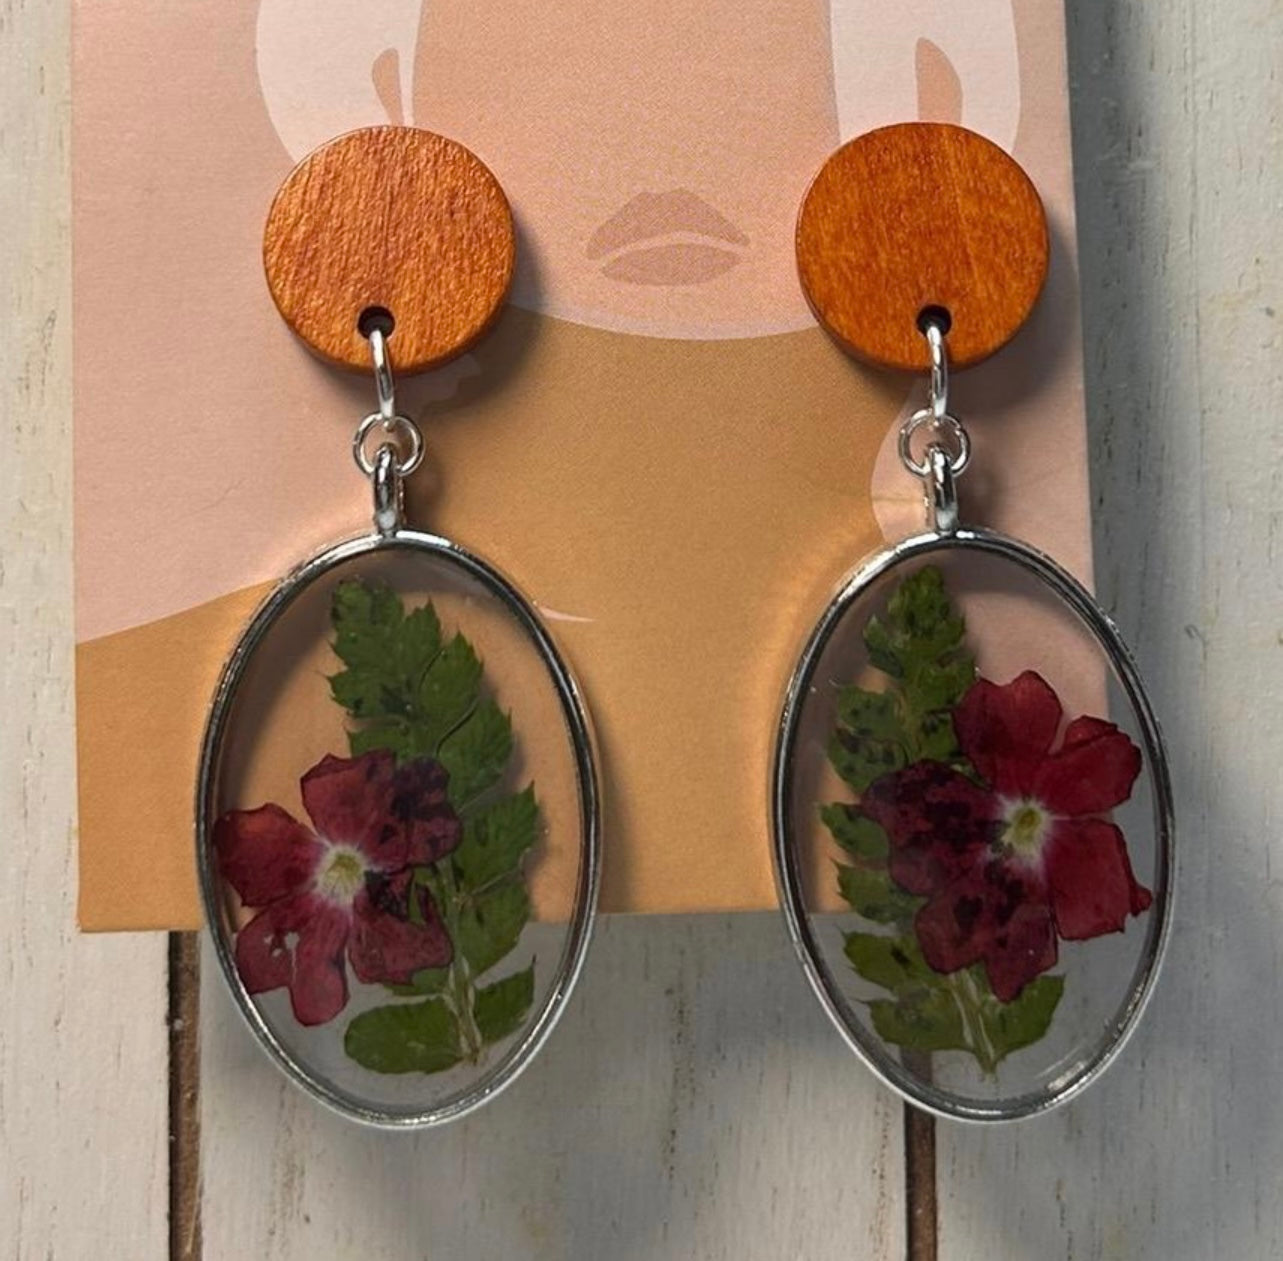 Oval pressed flower earrings